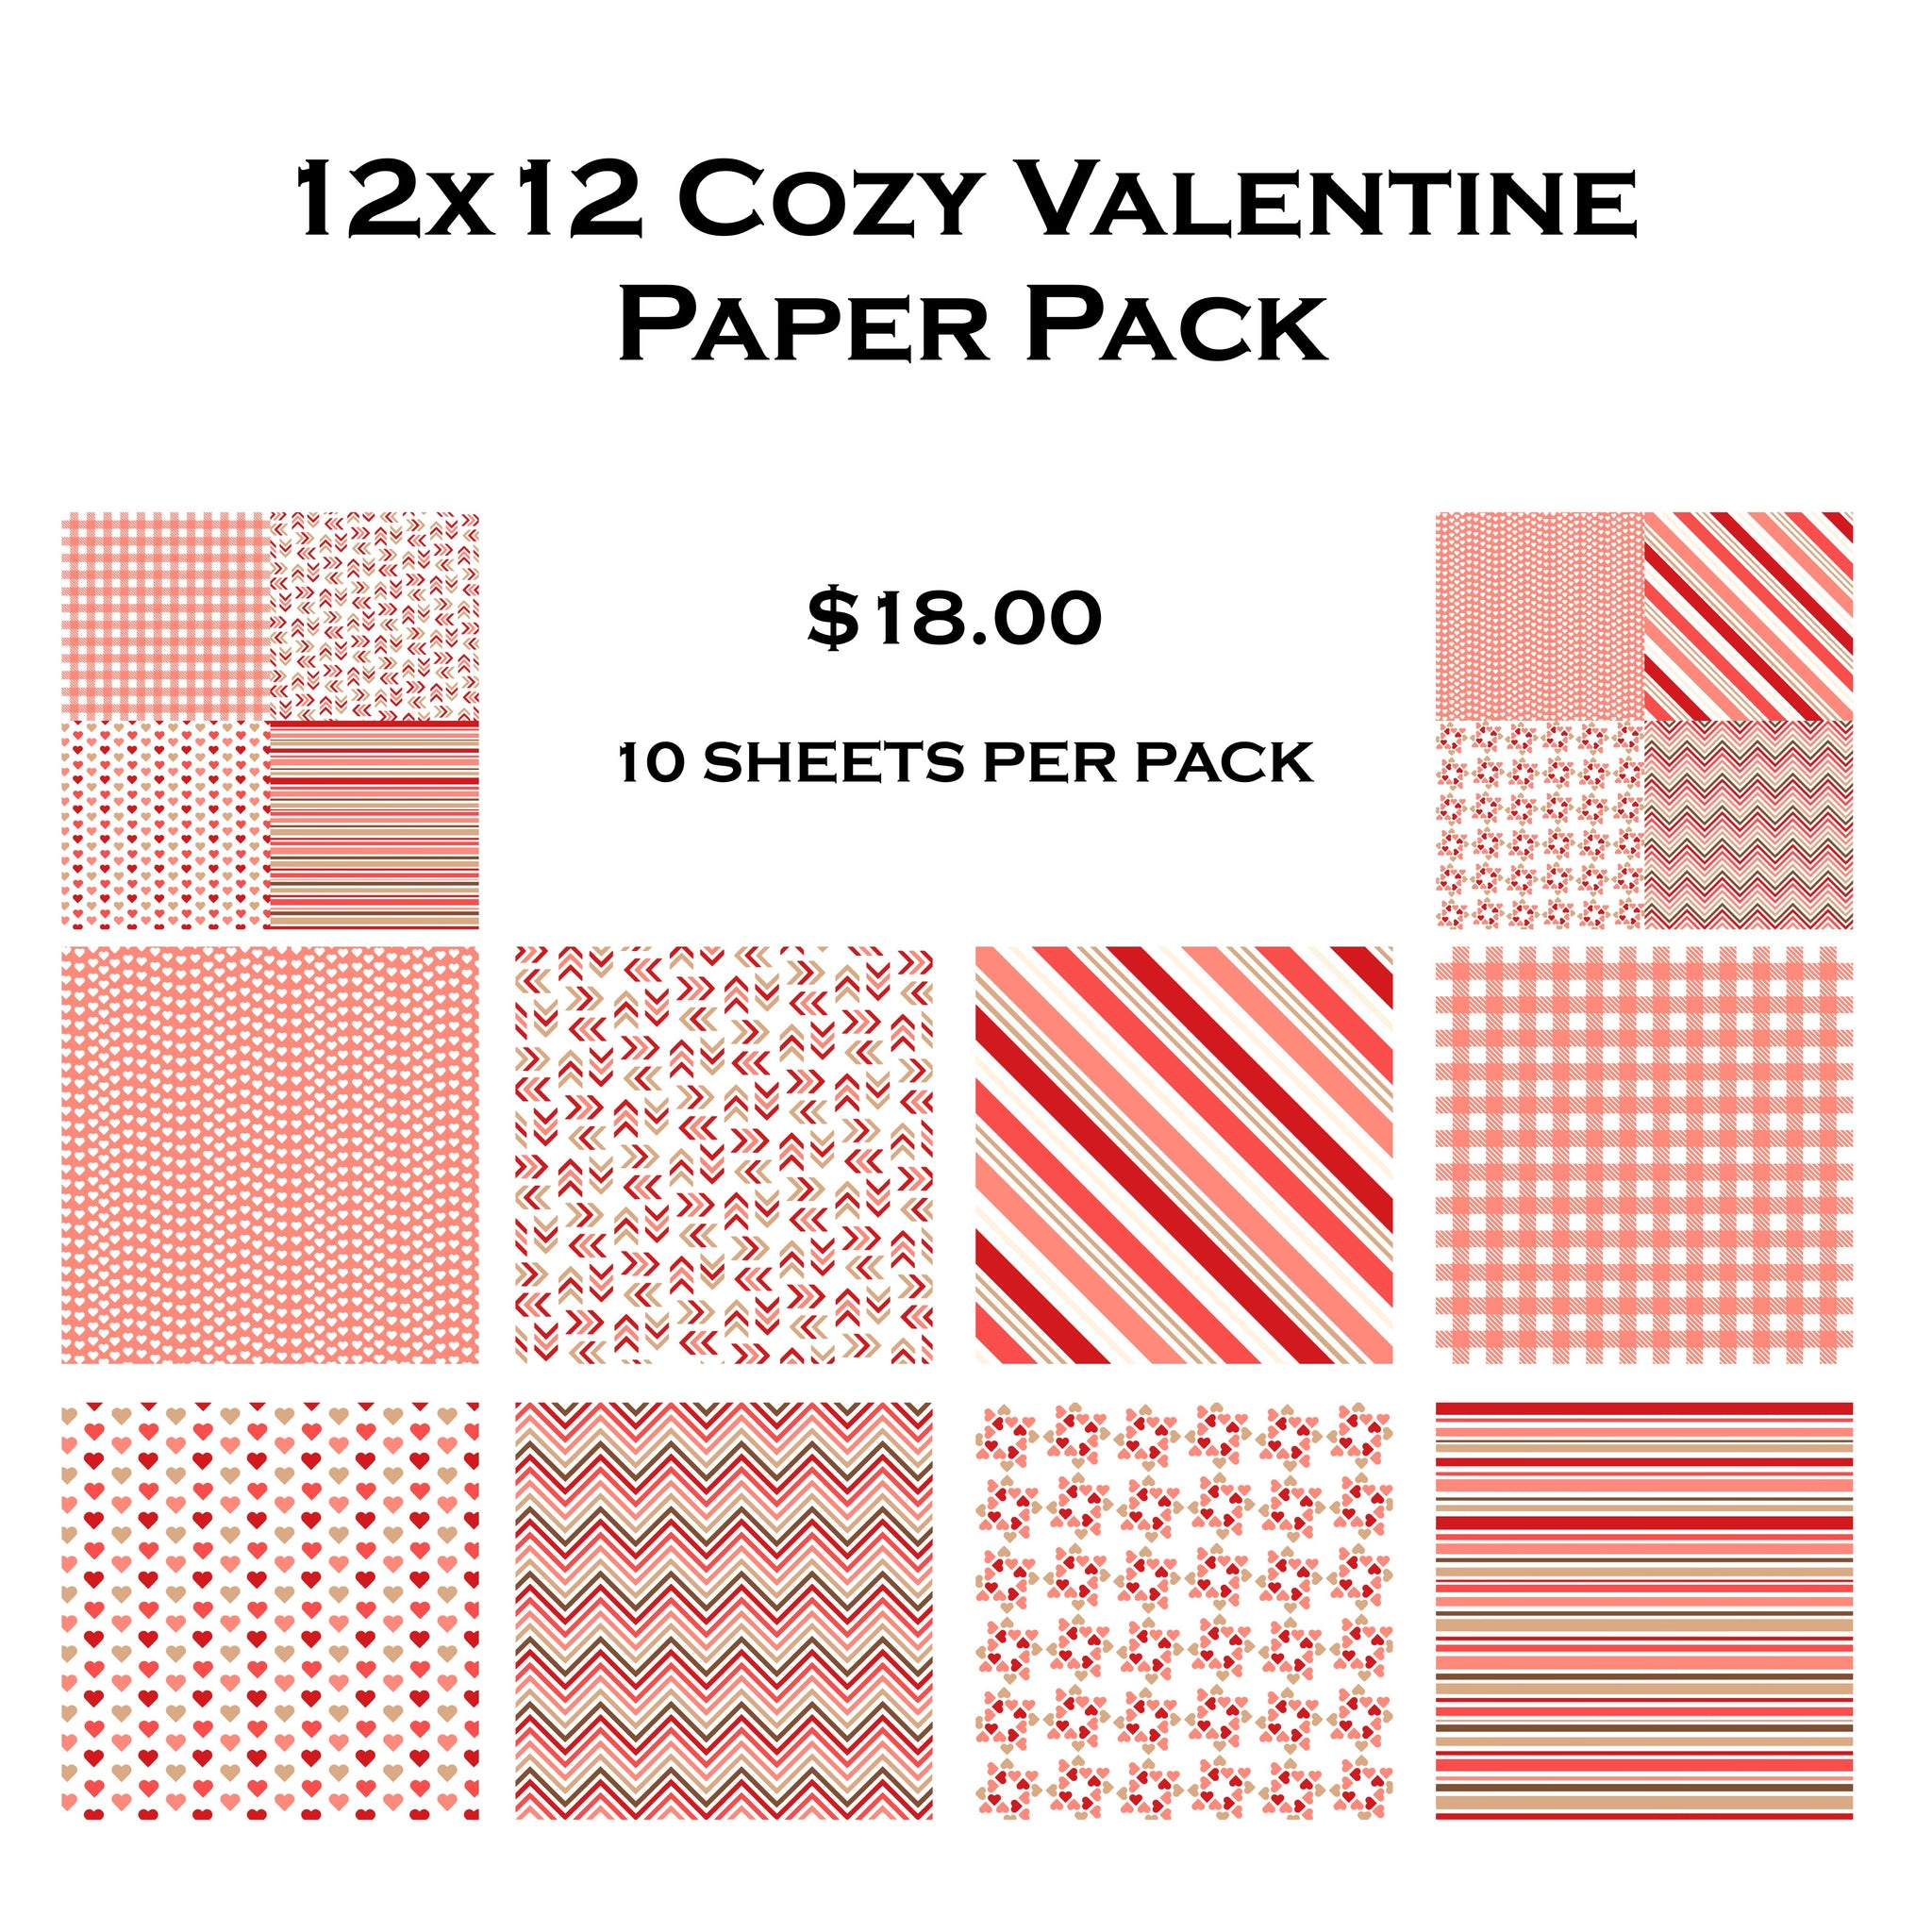 Cozy Valentine 12x12 Paper Pack